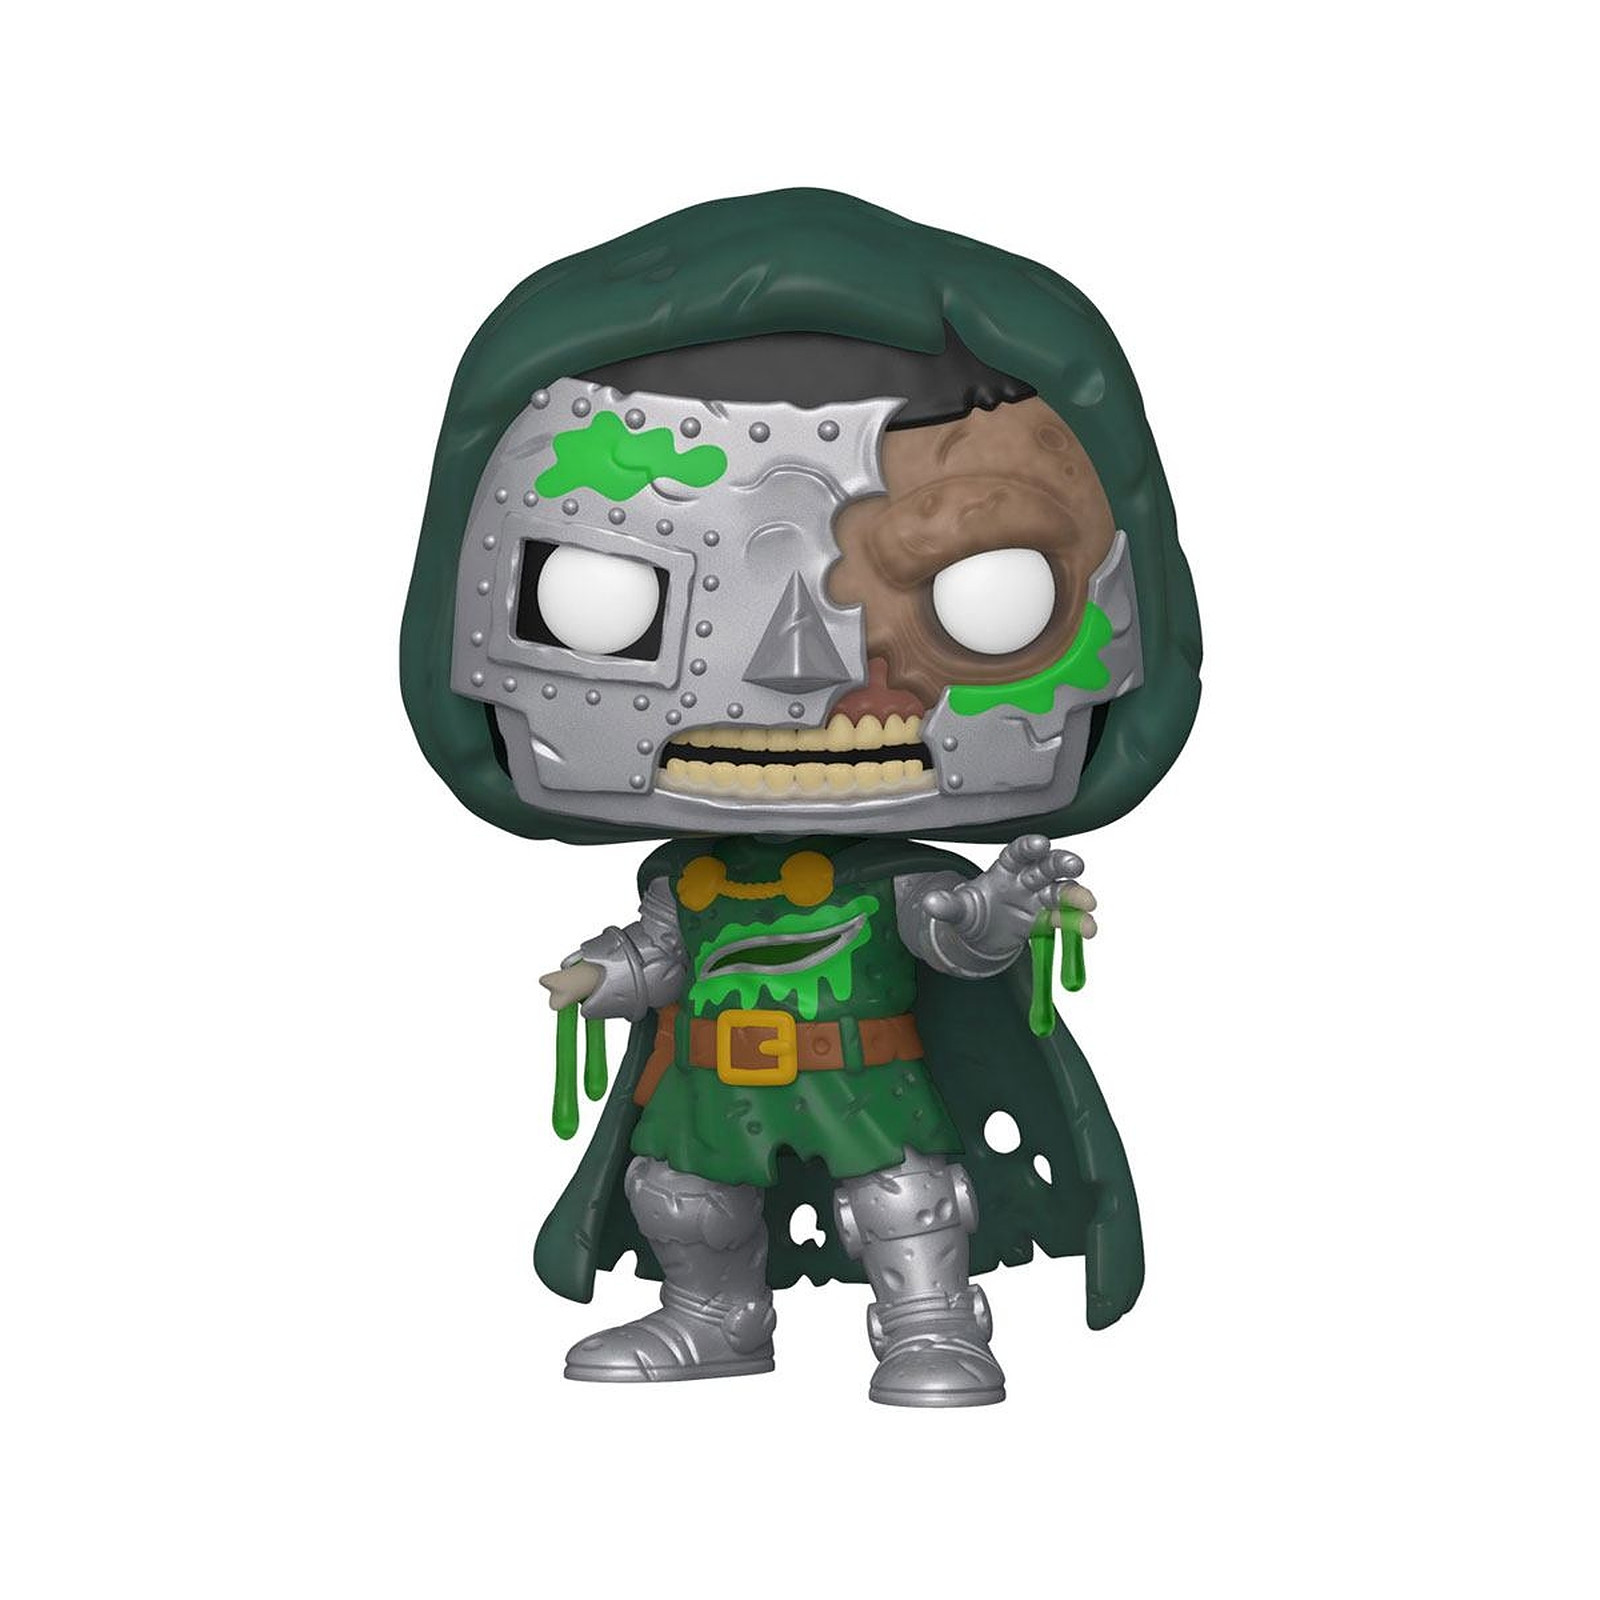 Marvel - Figurine POP! Zombie Dr. Doom 9 cm - Figurines Funko